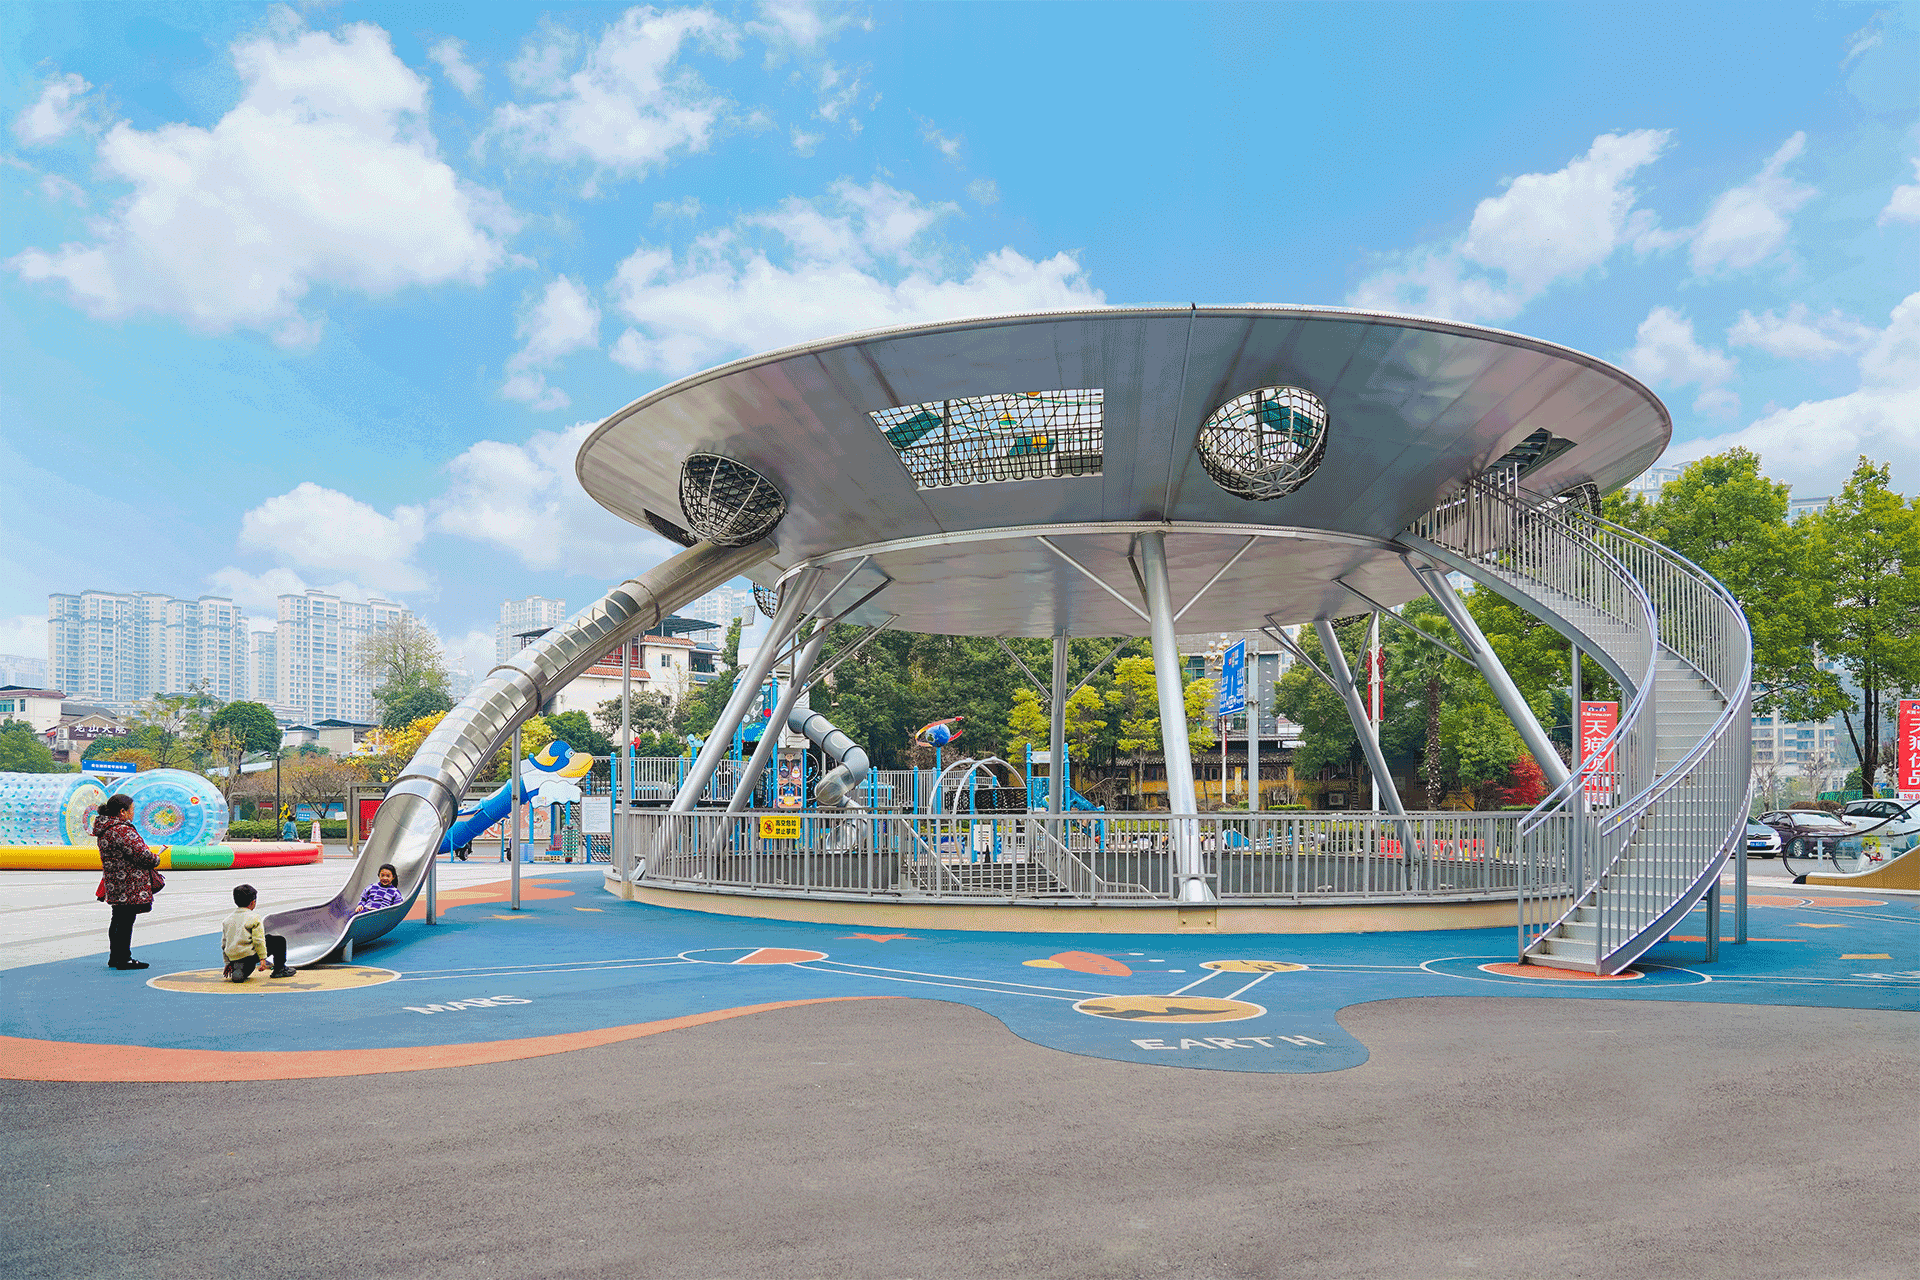 Aegean Sea City Square Children's Play Park